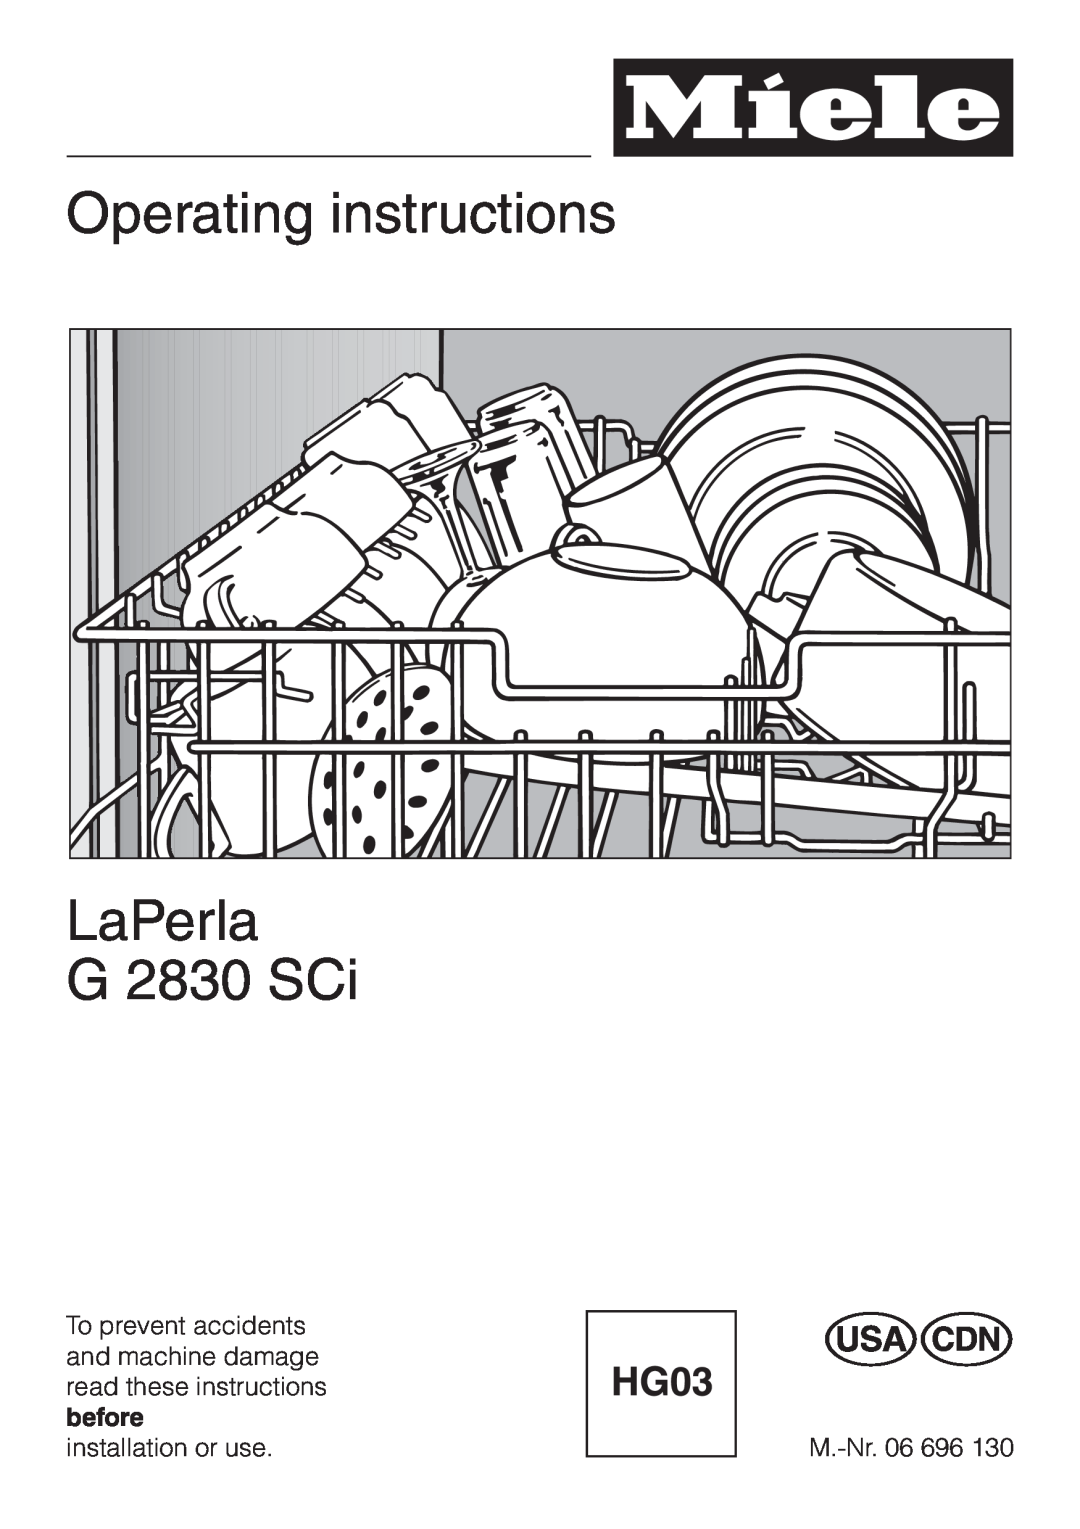 Miele manual Operating instructions LaPerla G 2830 SCi 